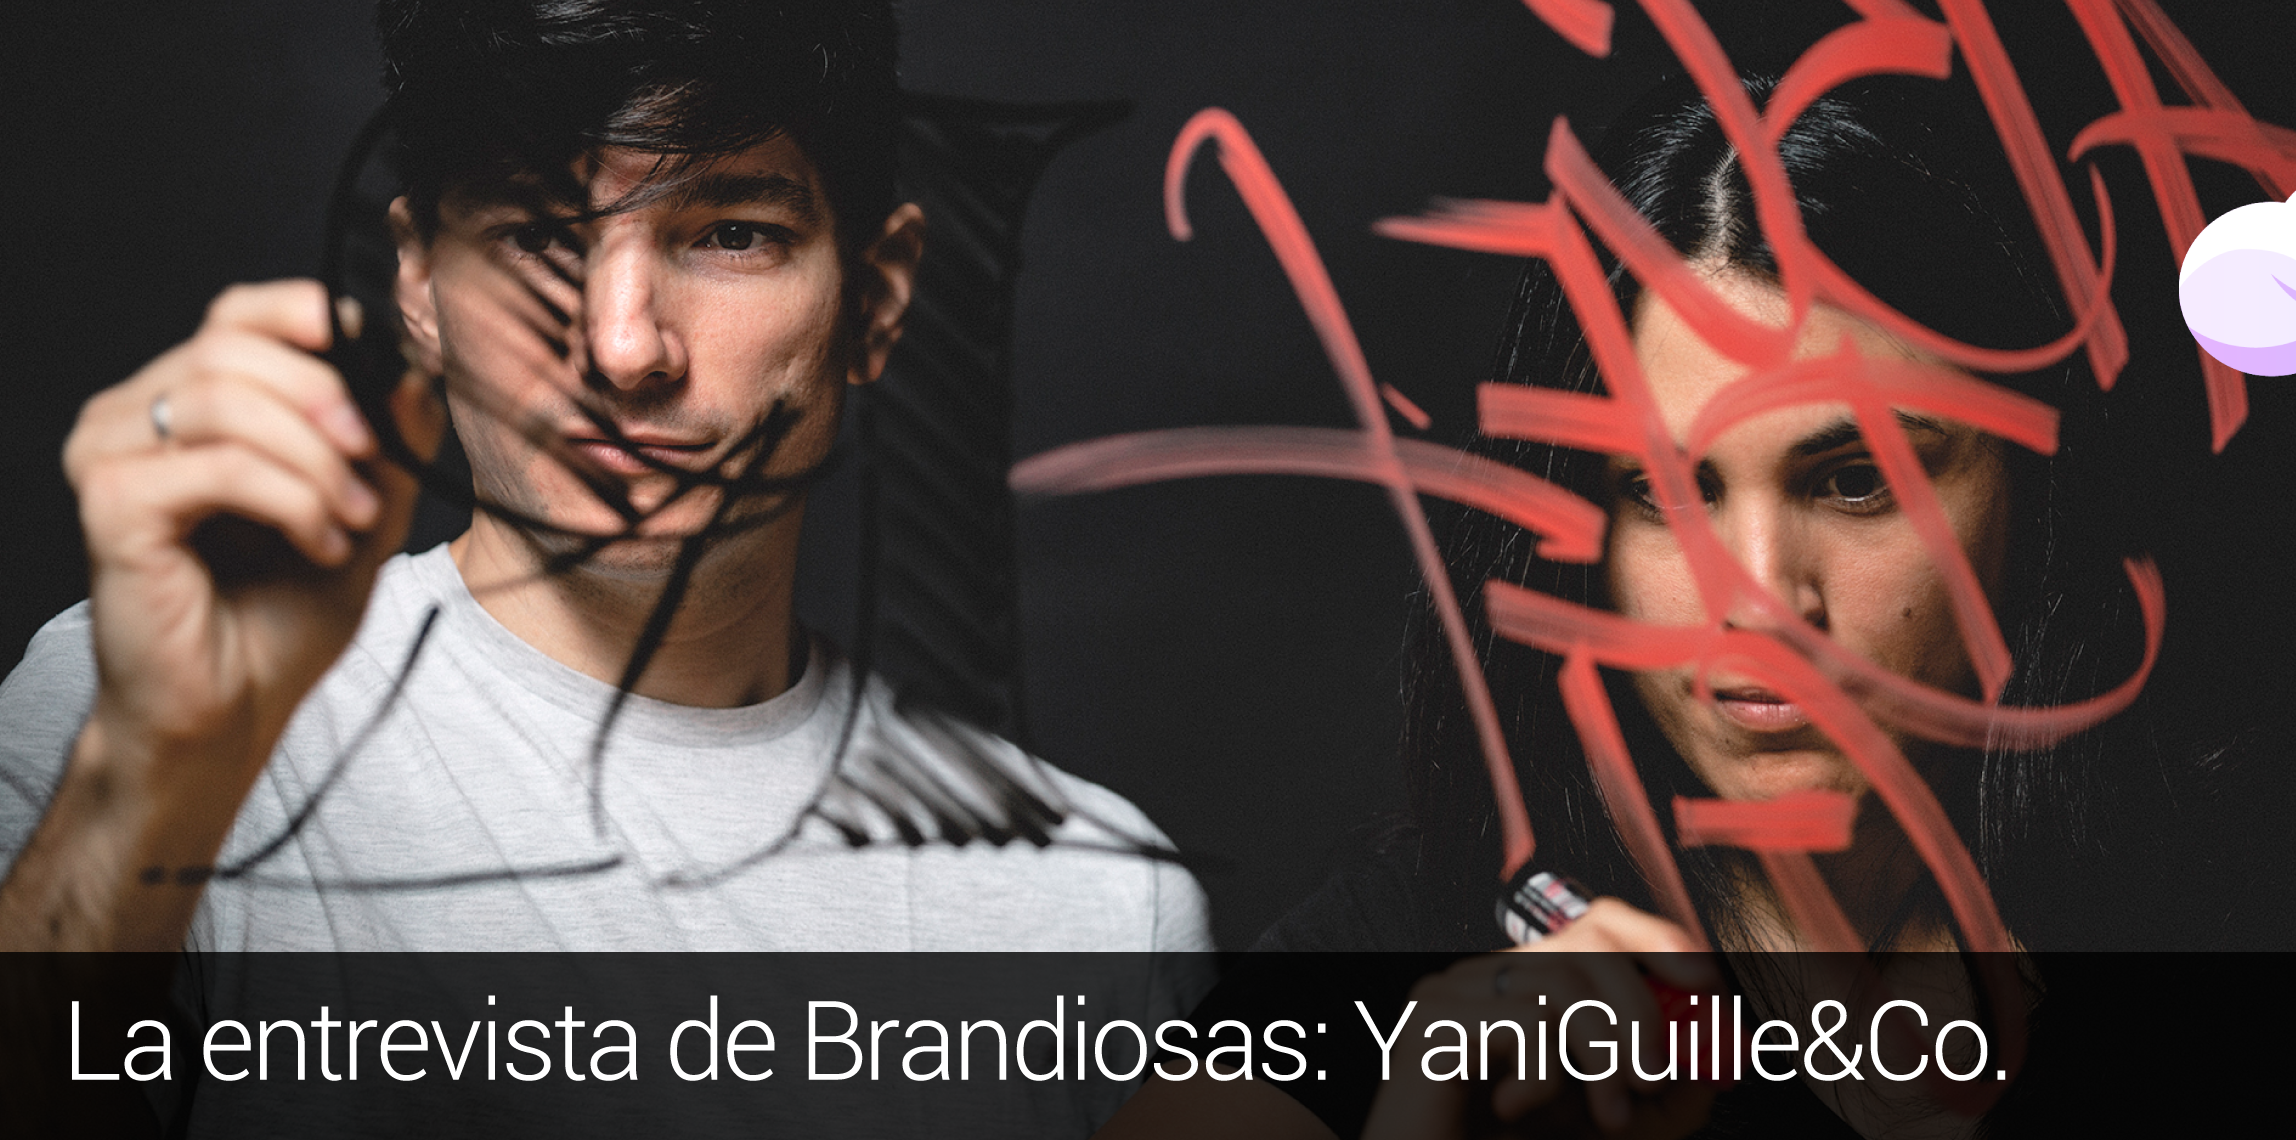 La entrevista de Brandiosas YaniGuille&Co.png